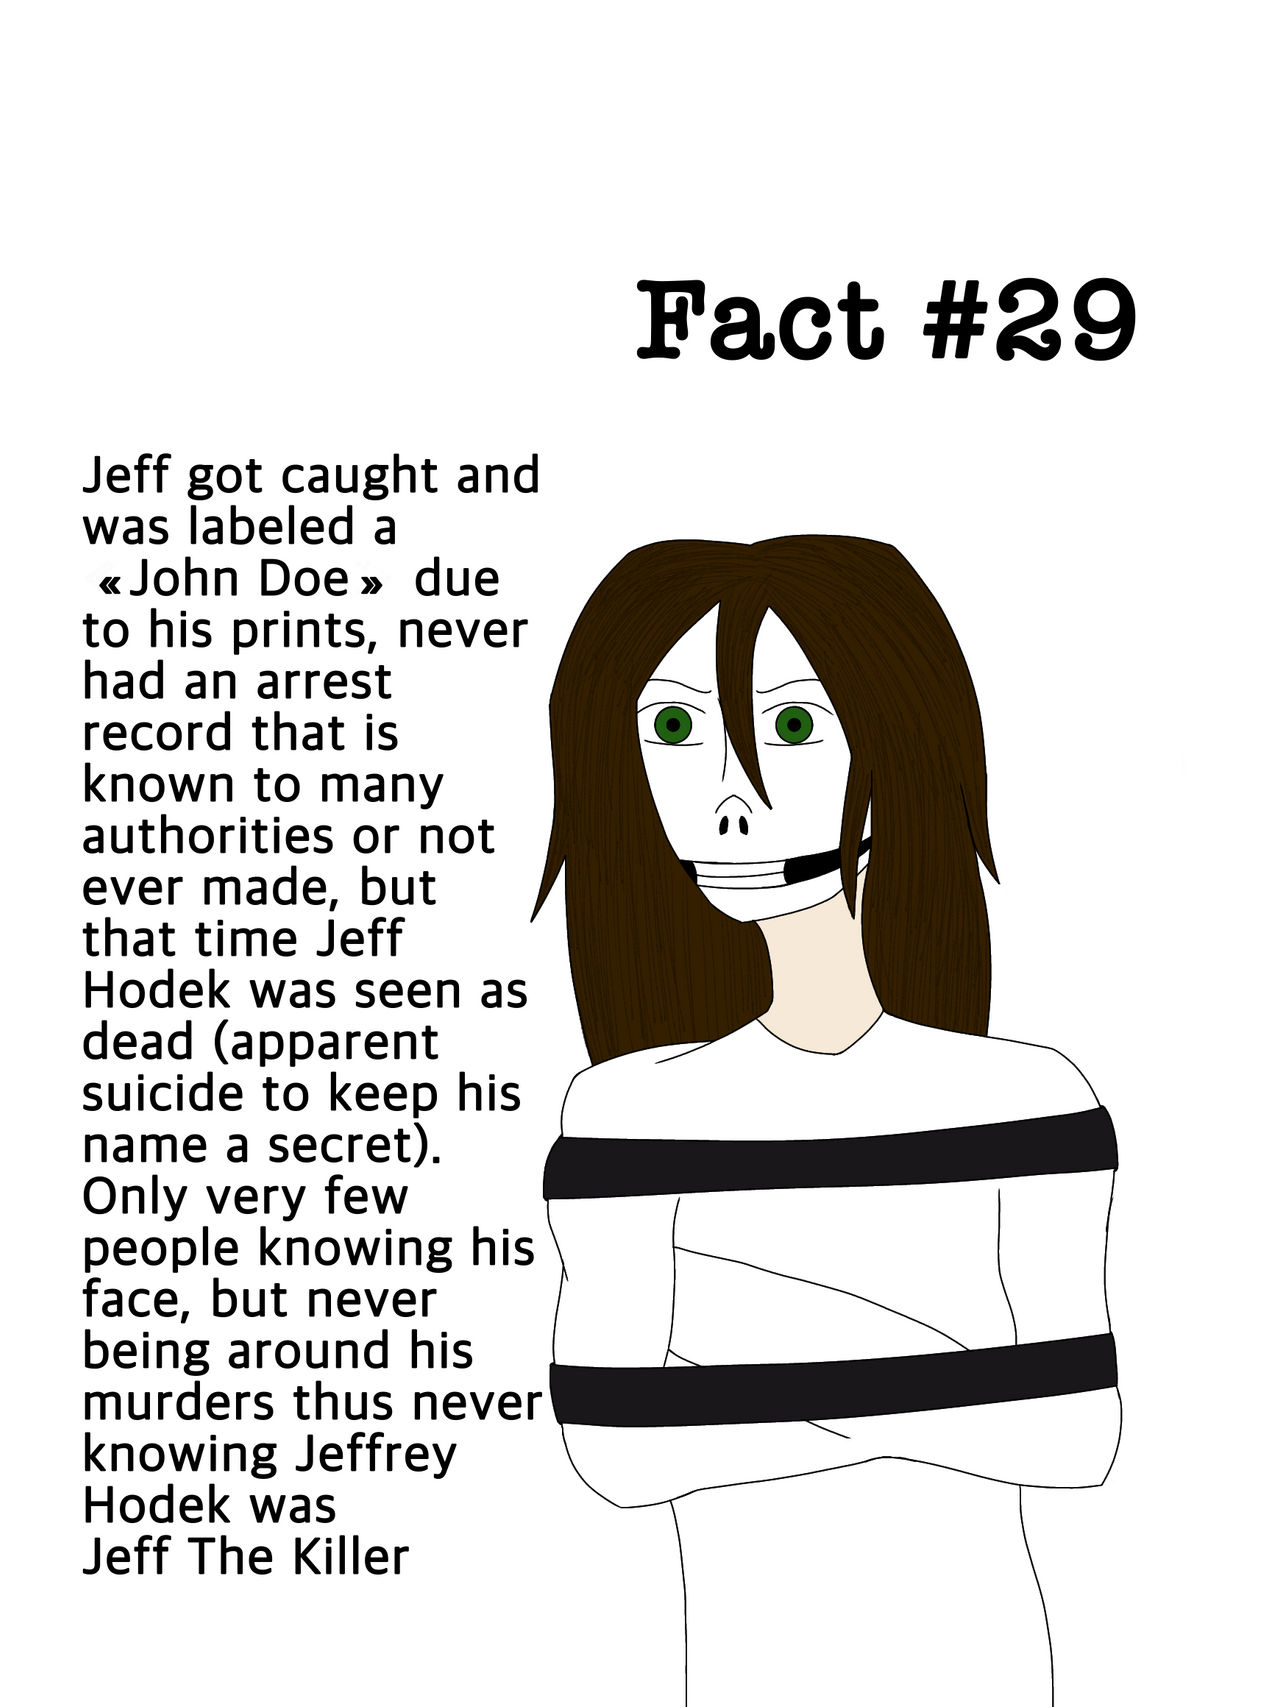 Jeff the Killer: Jeffrey Hodek by FreshDecimate on DeviantArt